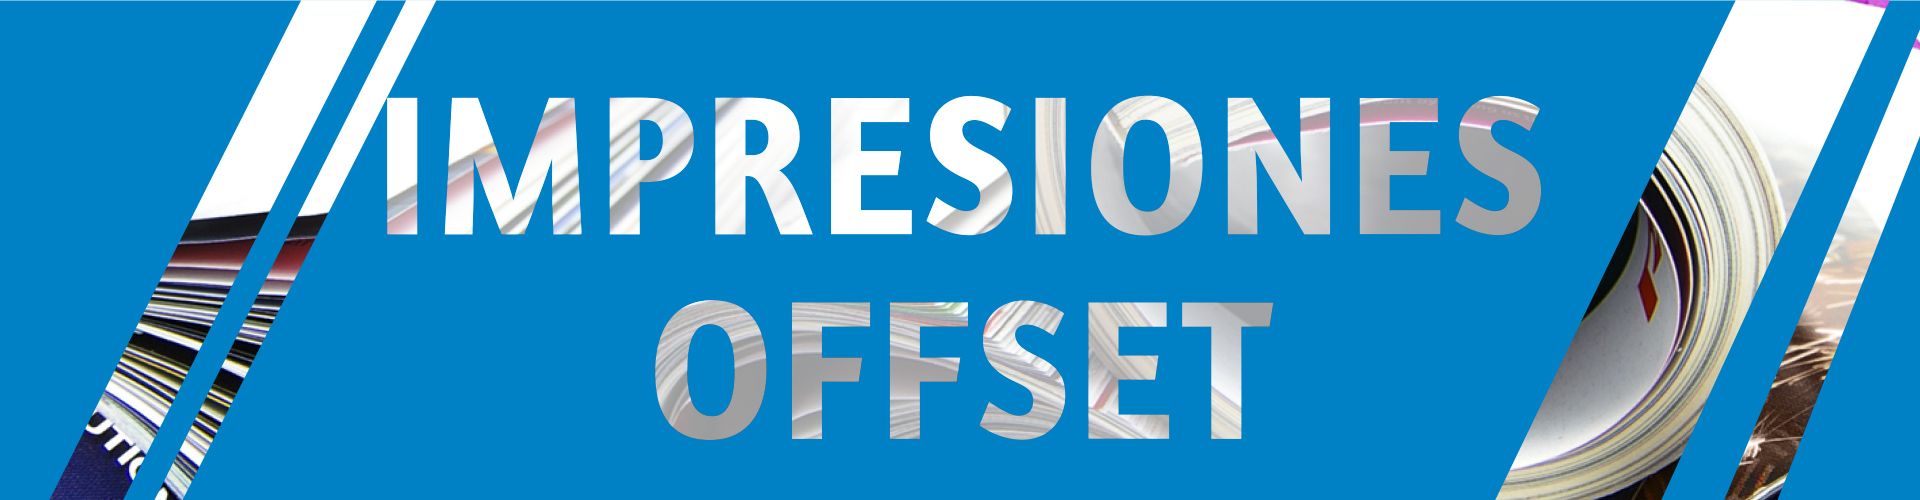 Impresiones Offset - Copiser impresión digital